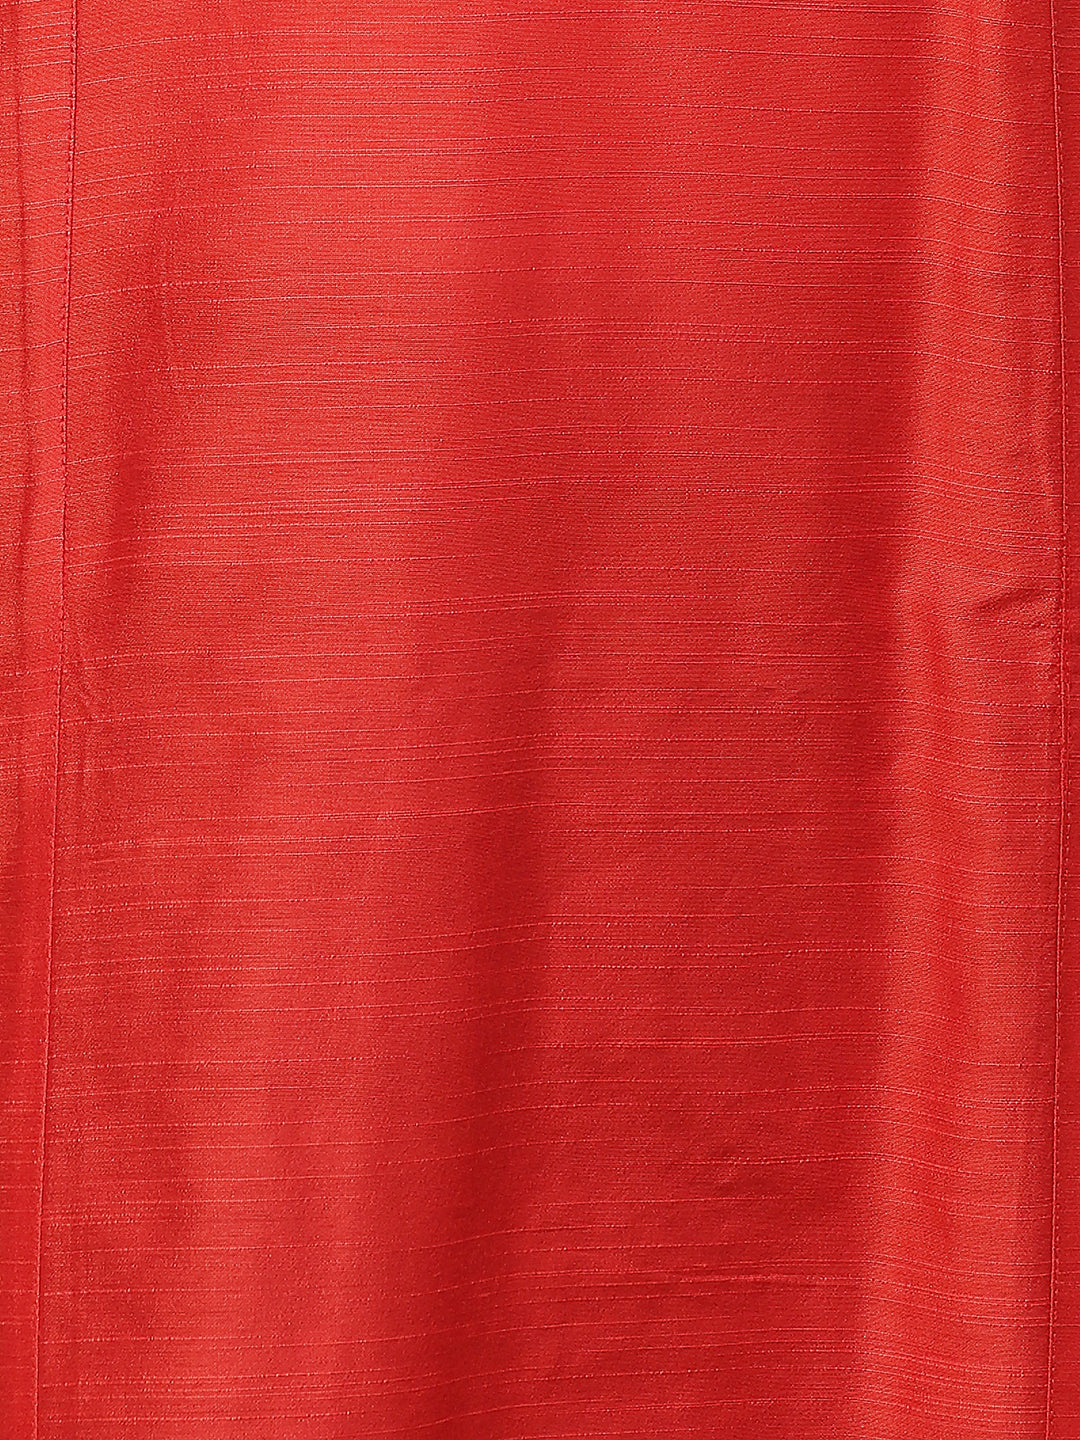 Ethnic Printed Anarkali Flare Kurta – Red